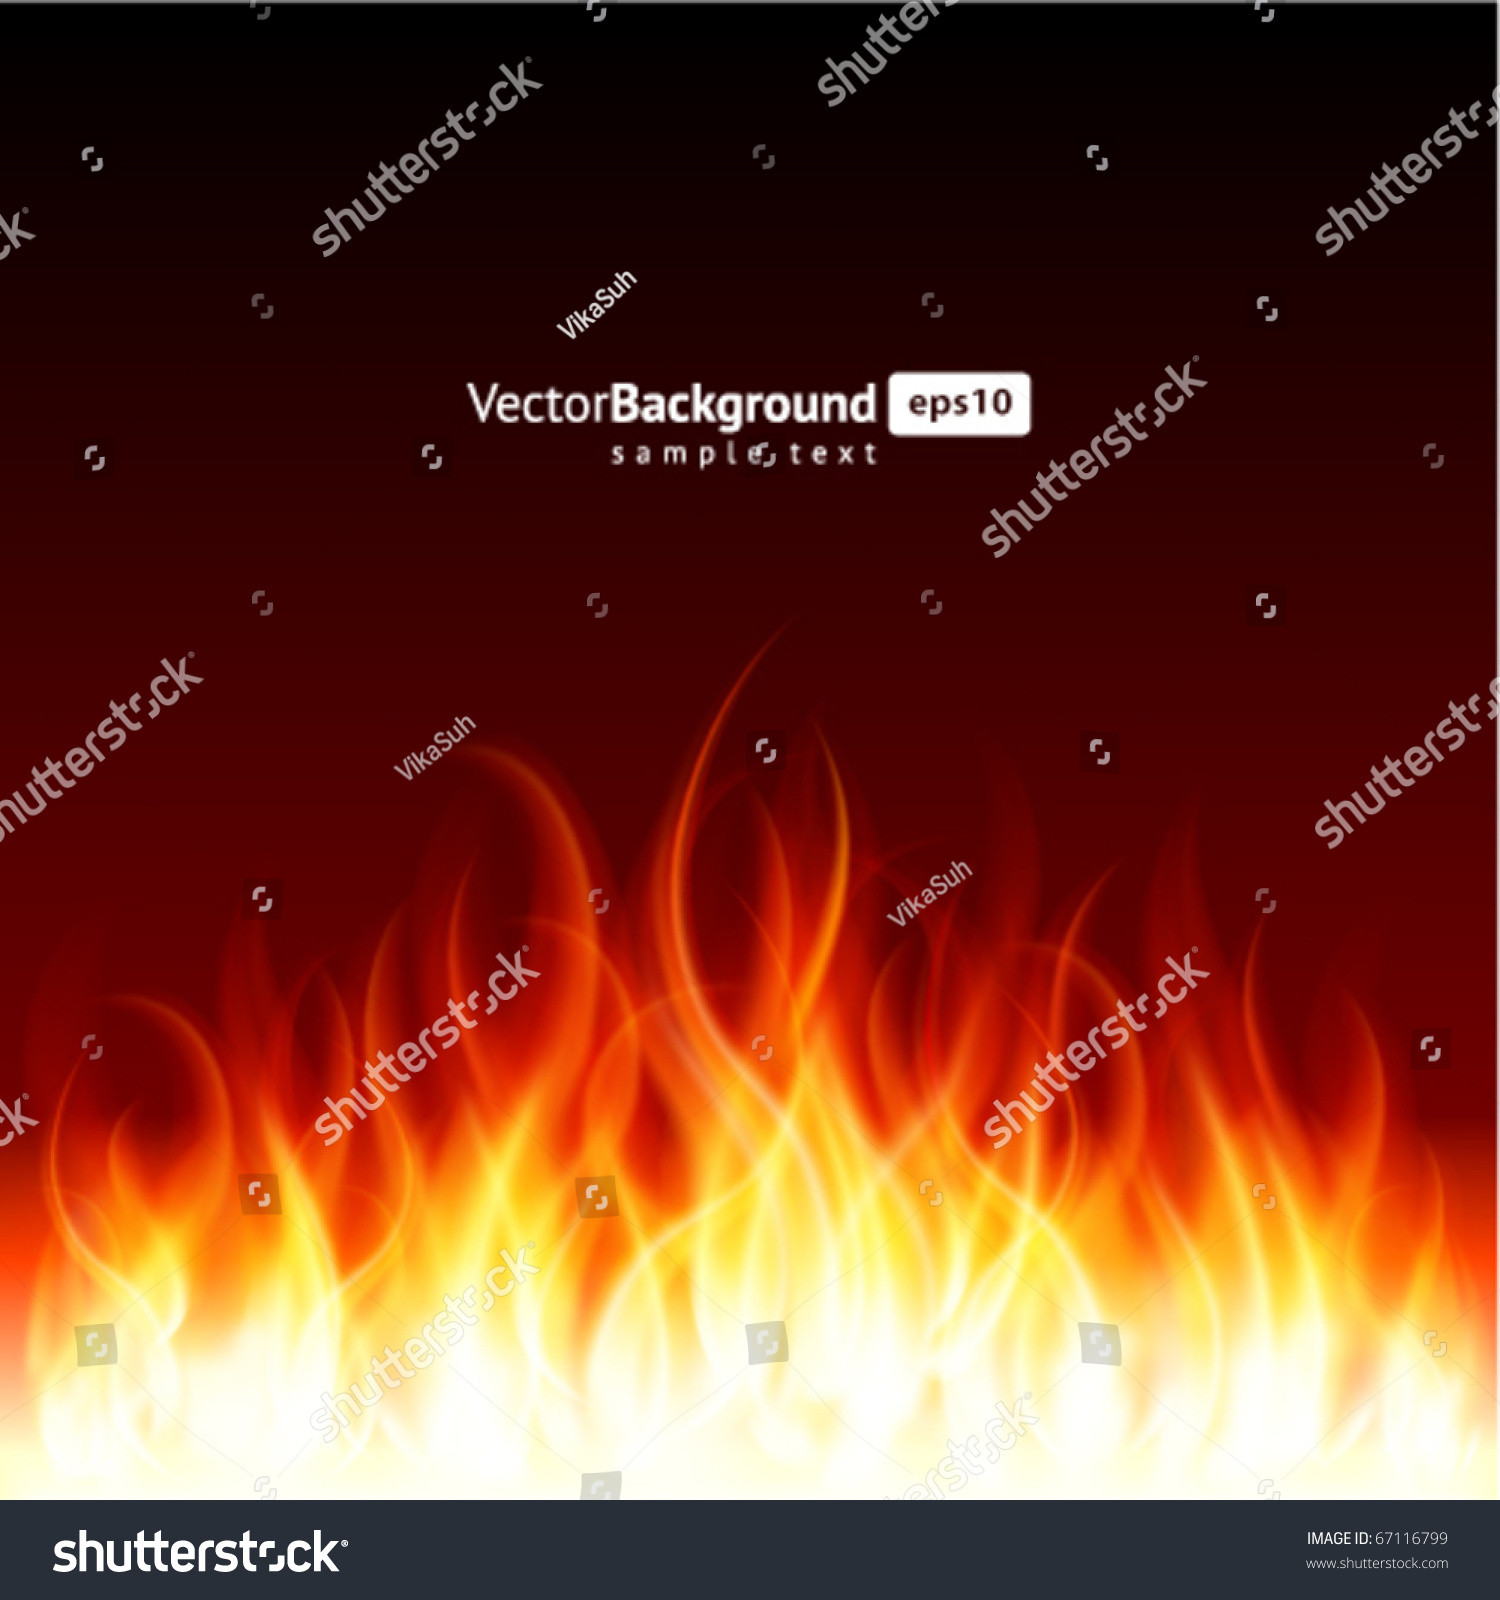 Burn Flame Fire Vector Background - 67116799 : Shutterstock